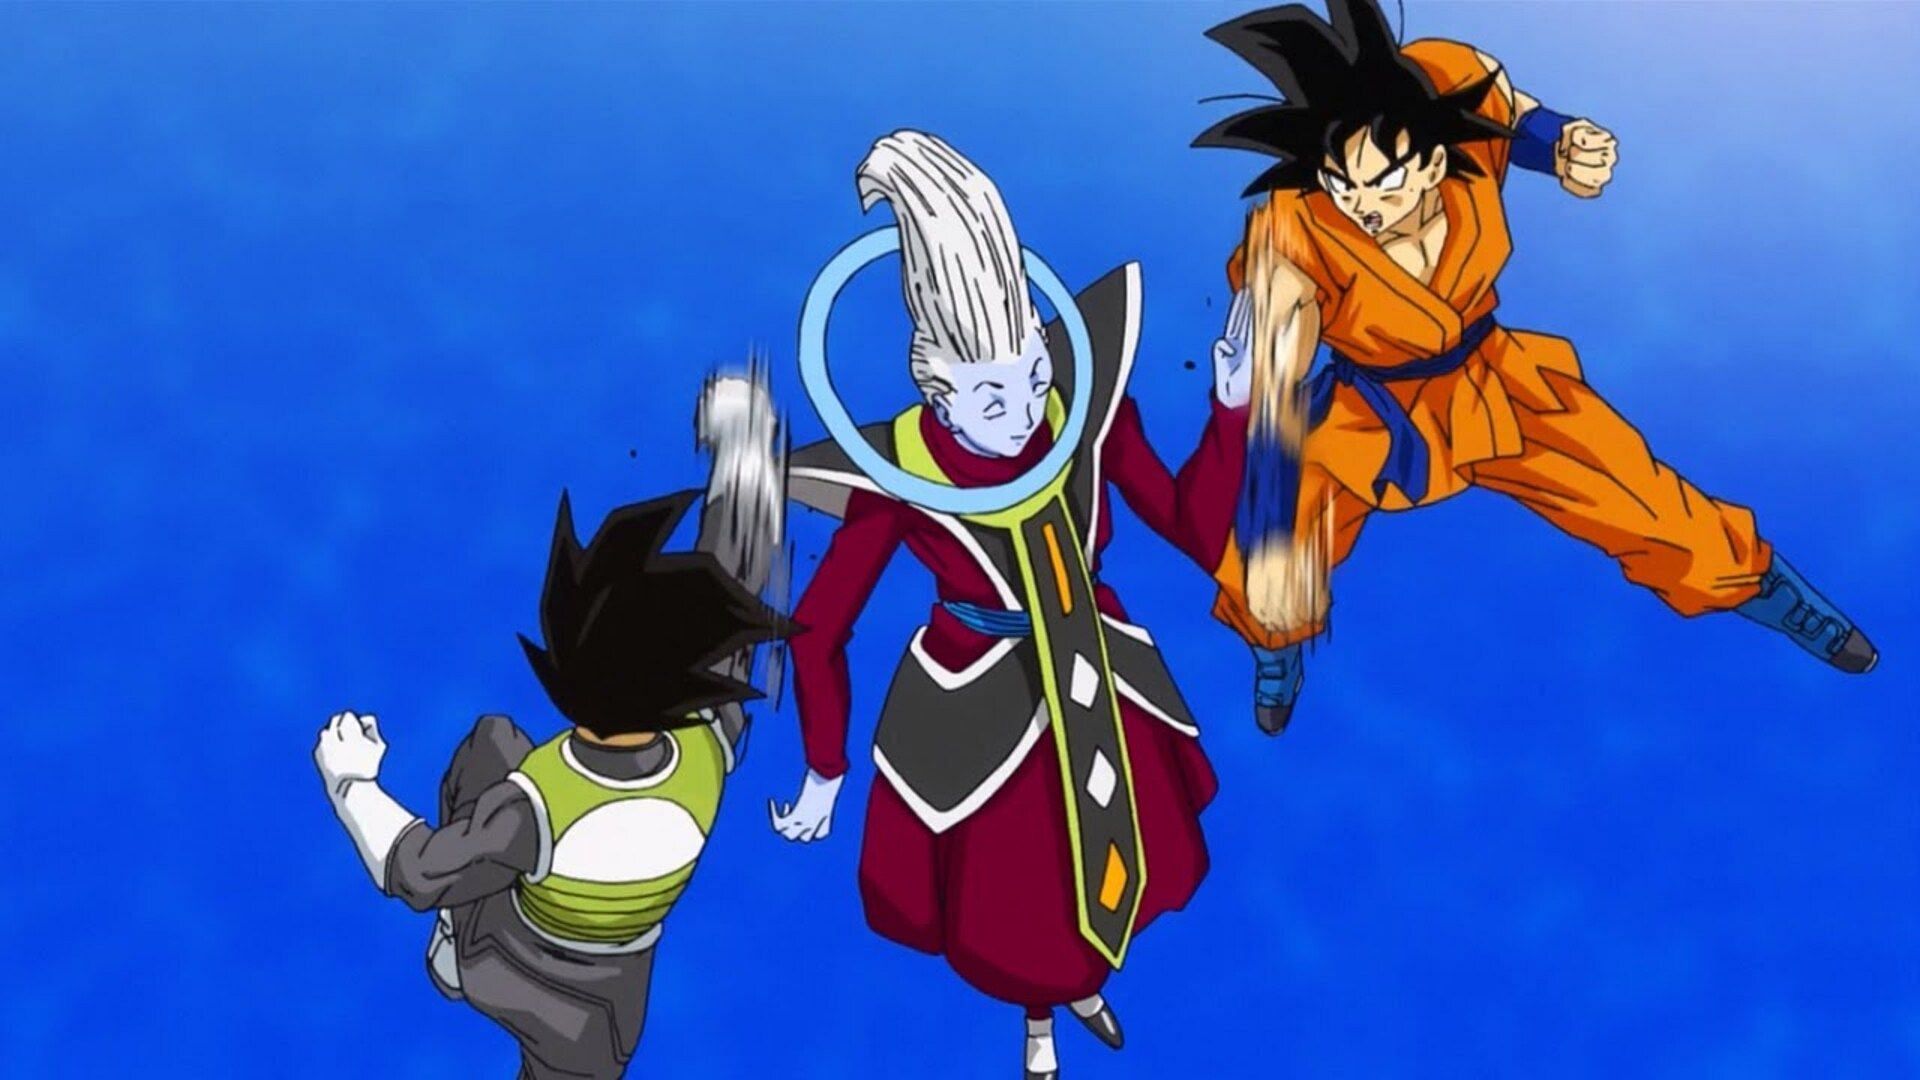 Whis training Goku and Vegeta (Image via Toei Animation)